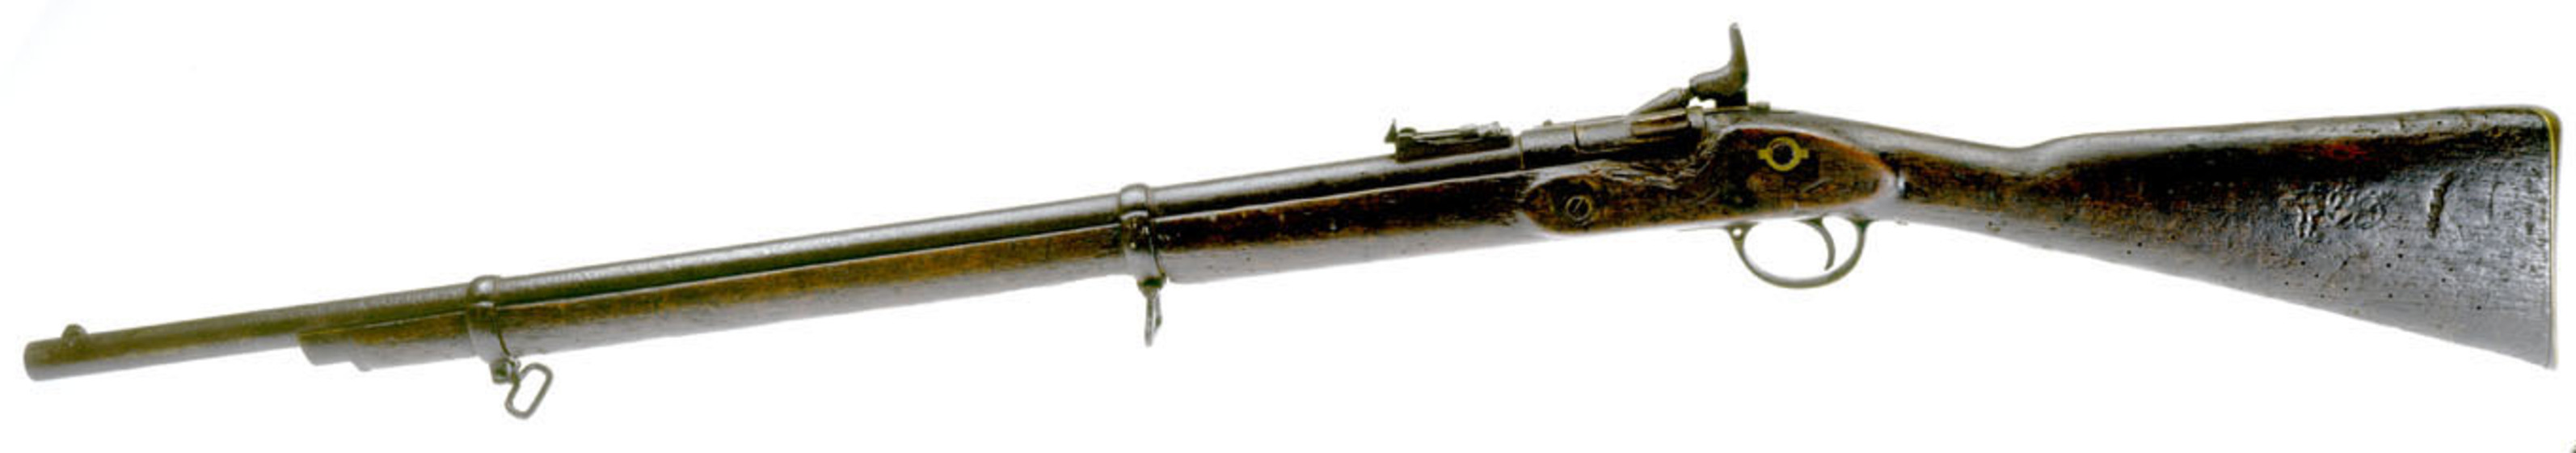 early long arm rifle